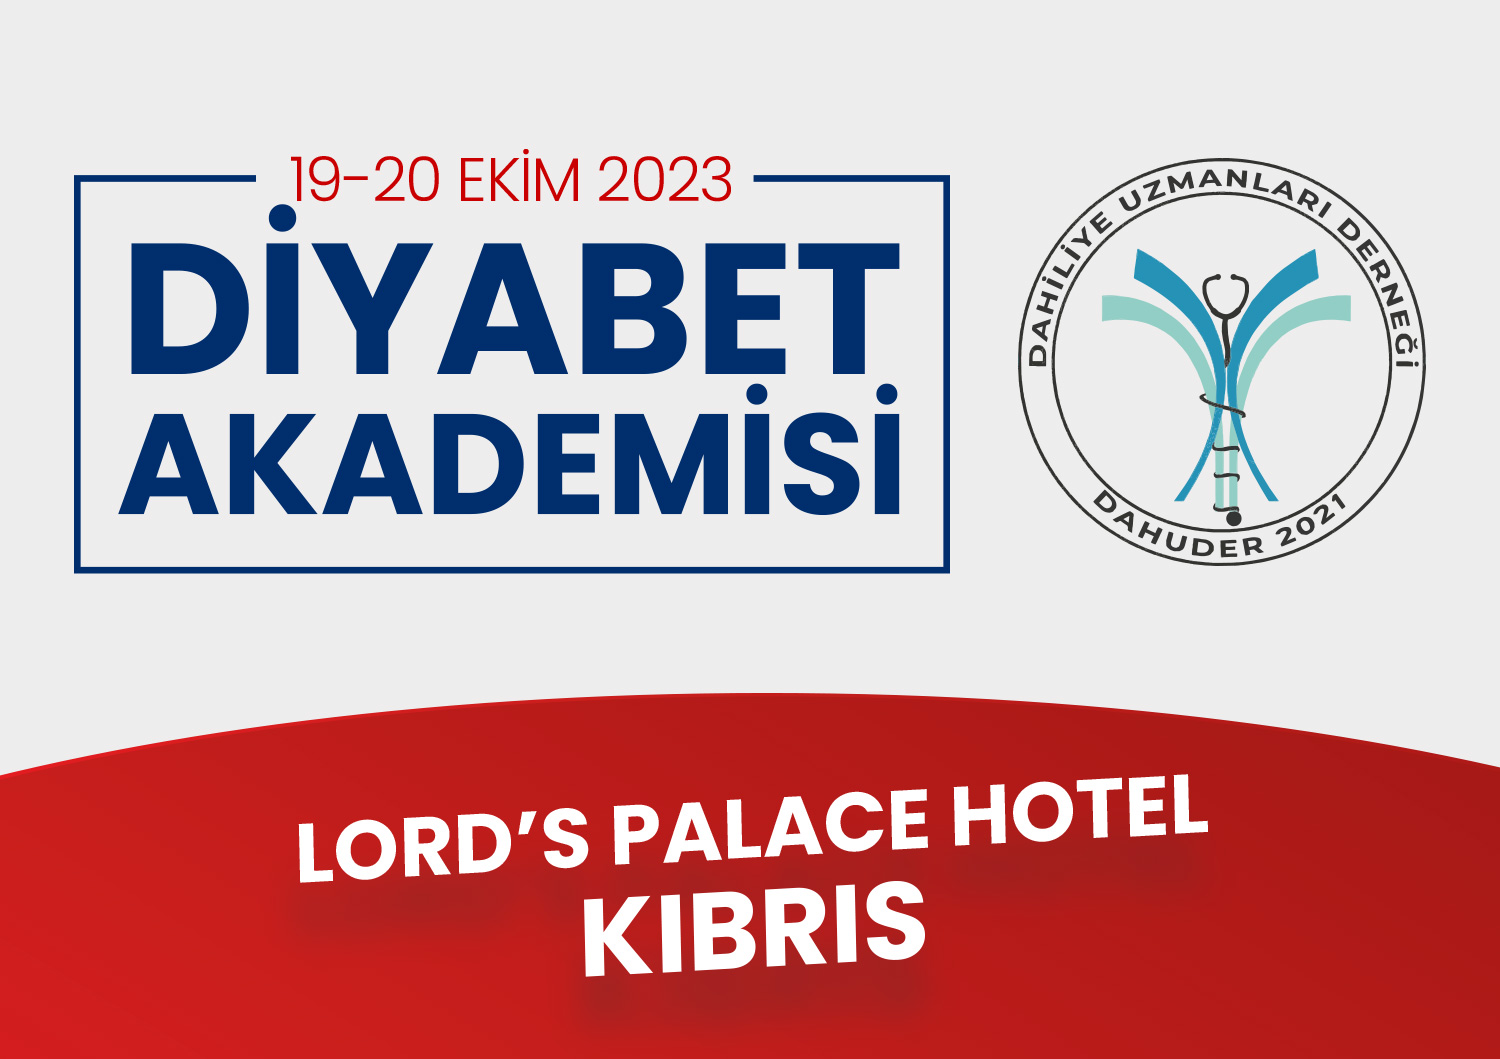 Diyabet Akademisi / 19-20 Ekim 2023 - Kıbrıs